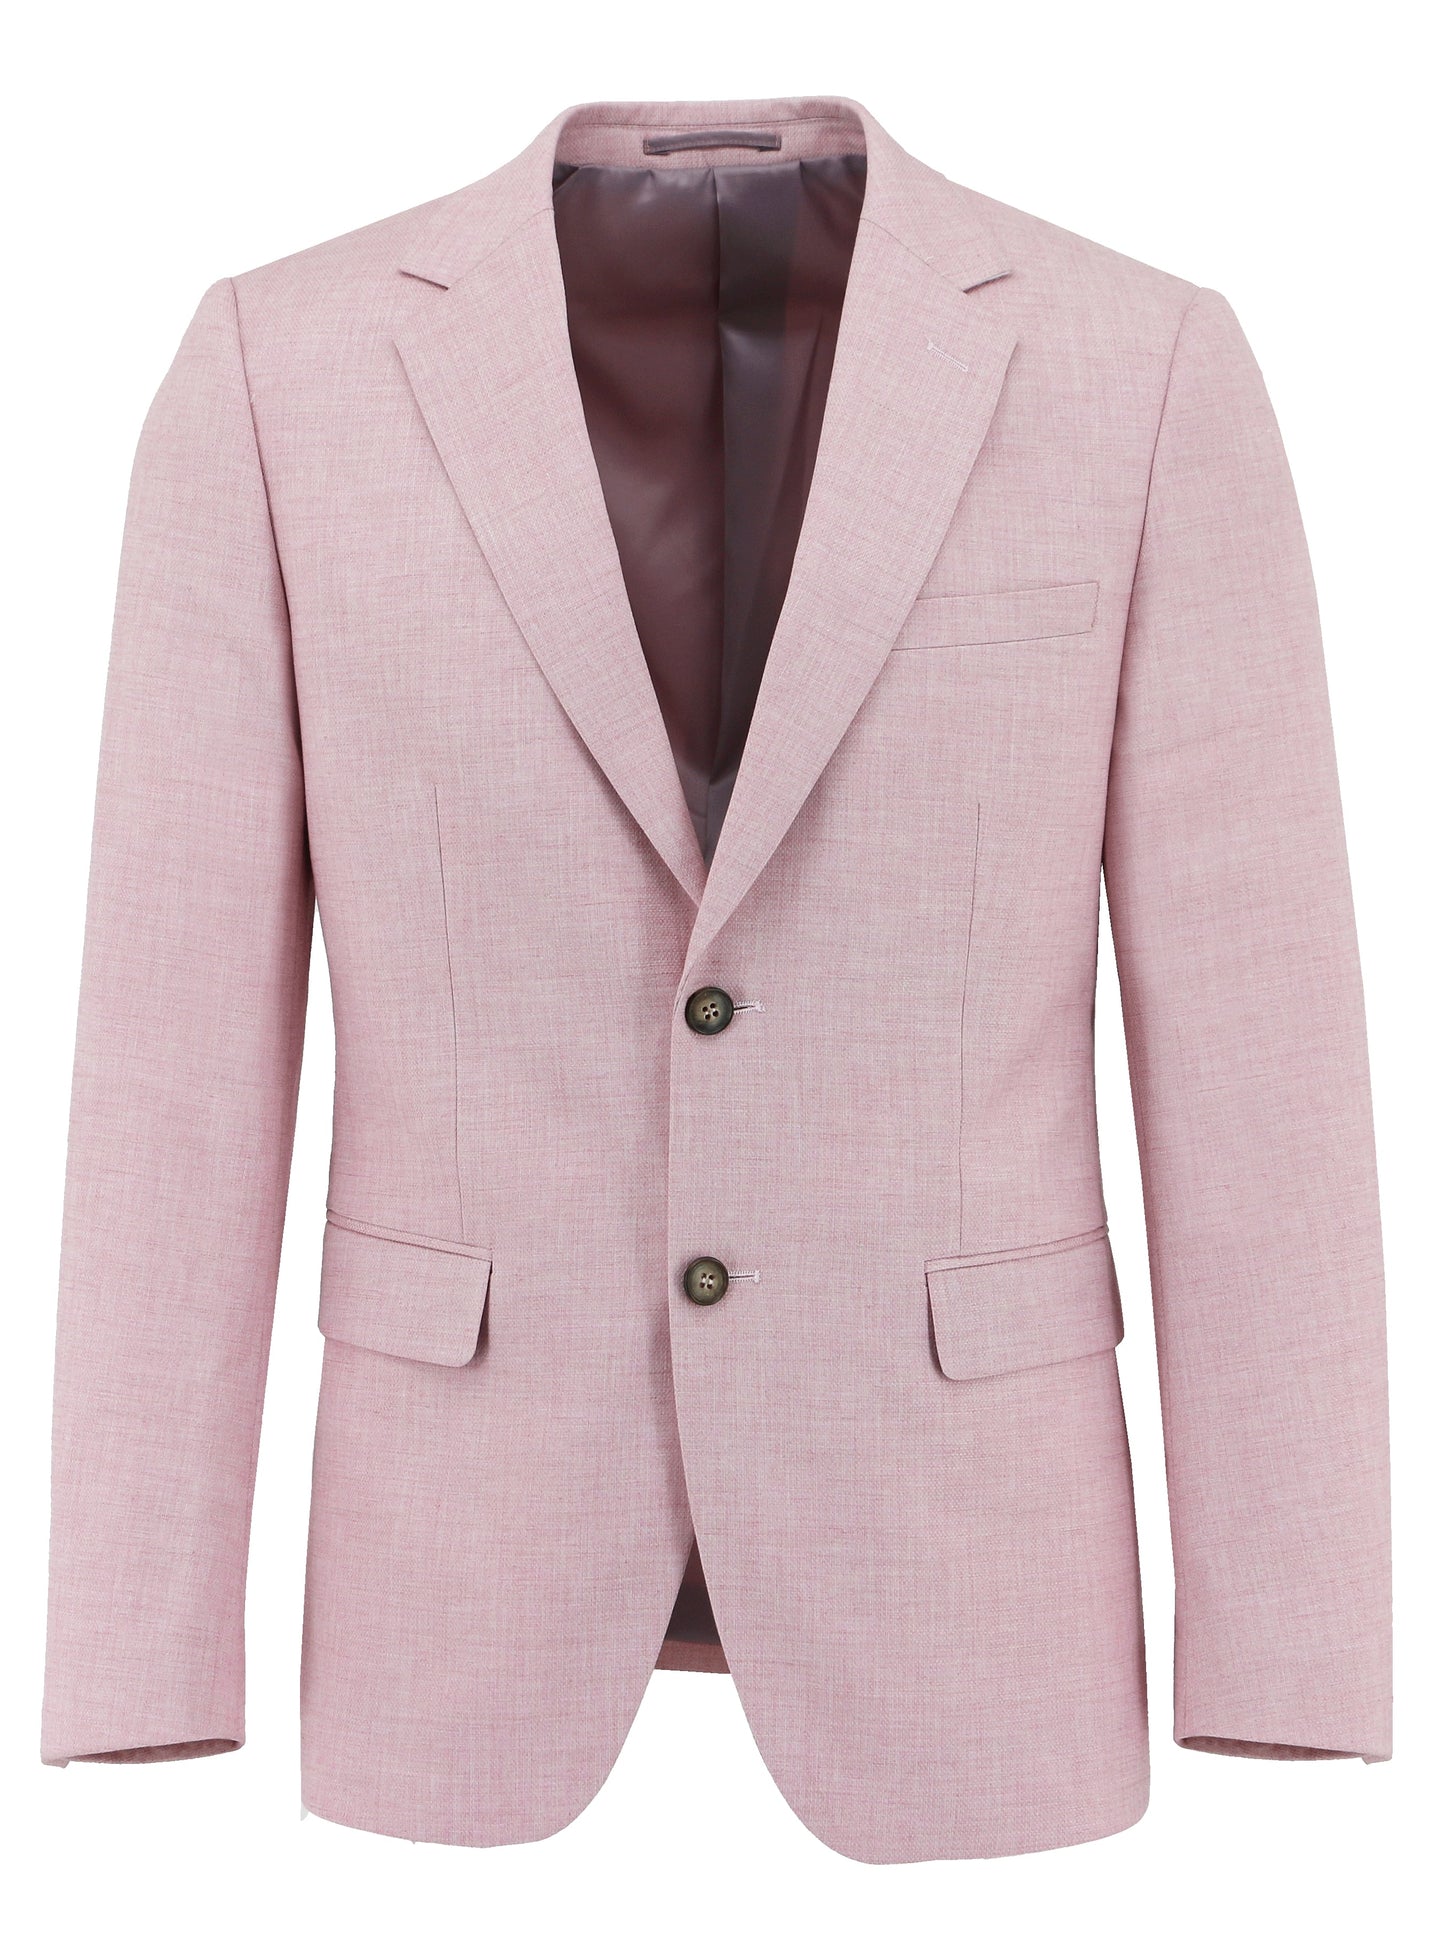 Jasper Edward Pink Suit